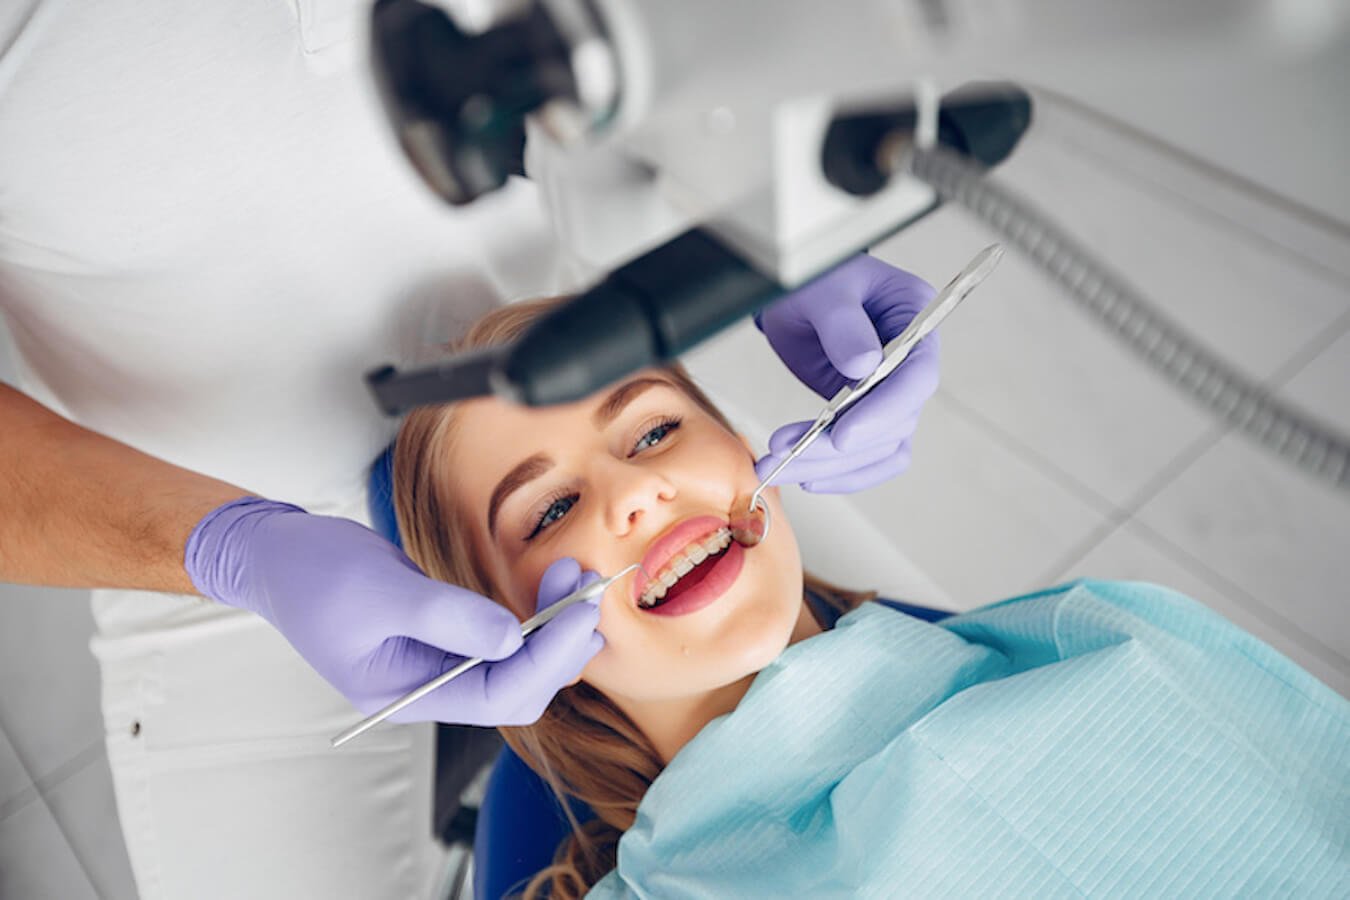 Dental Hygiene - Klaipeda State University of Applied Sciences